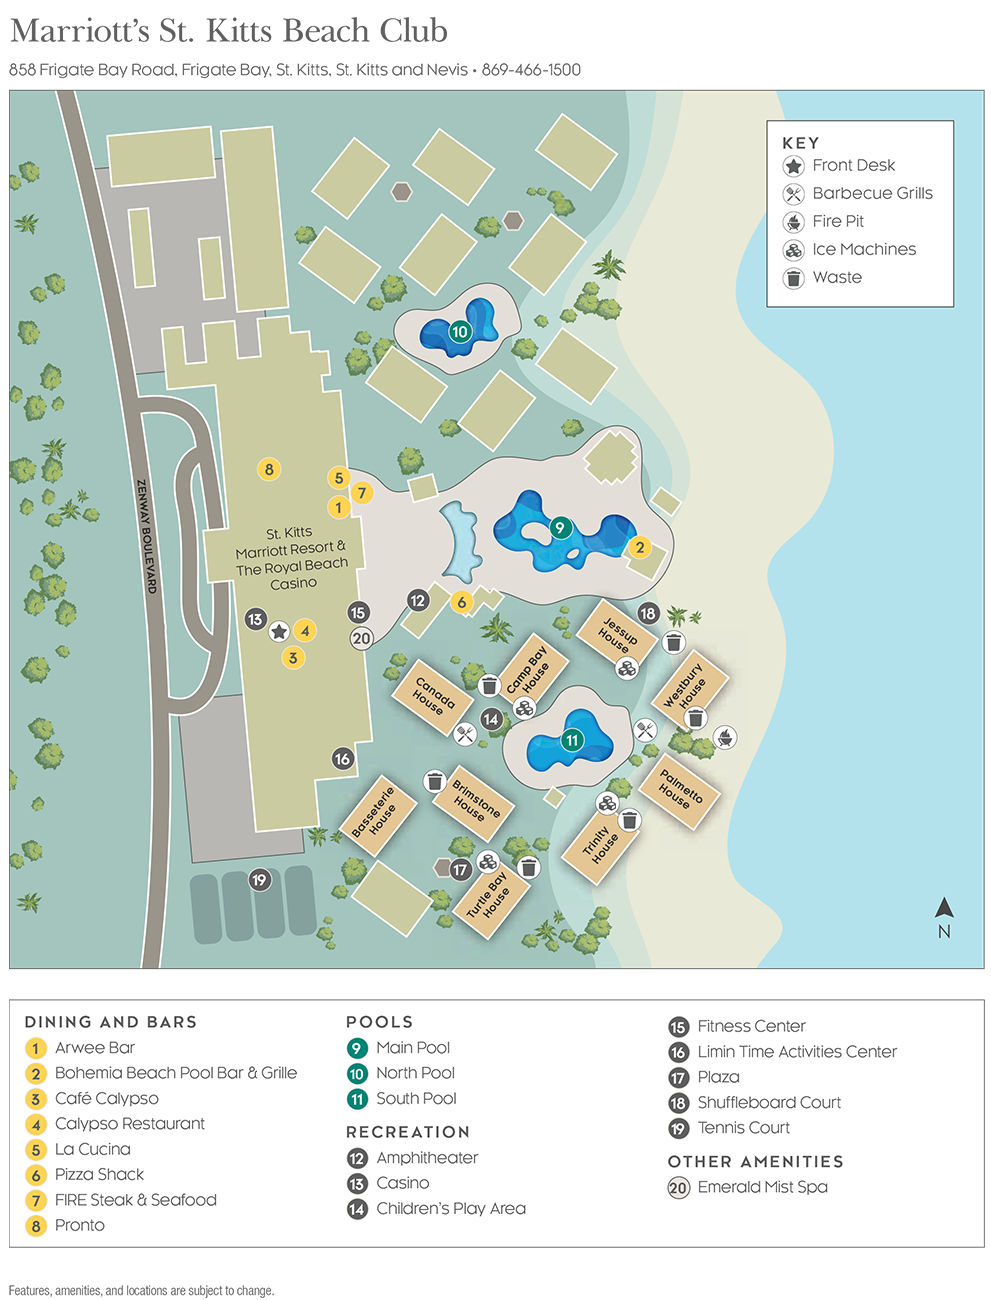 Marriott St. Kitts Beach Club Resort Map